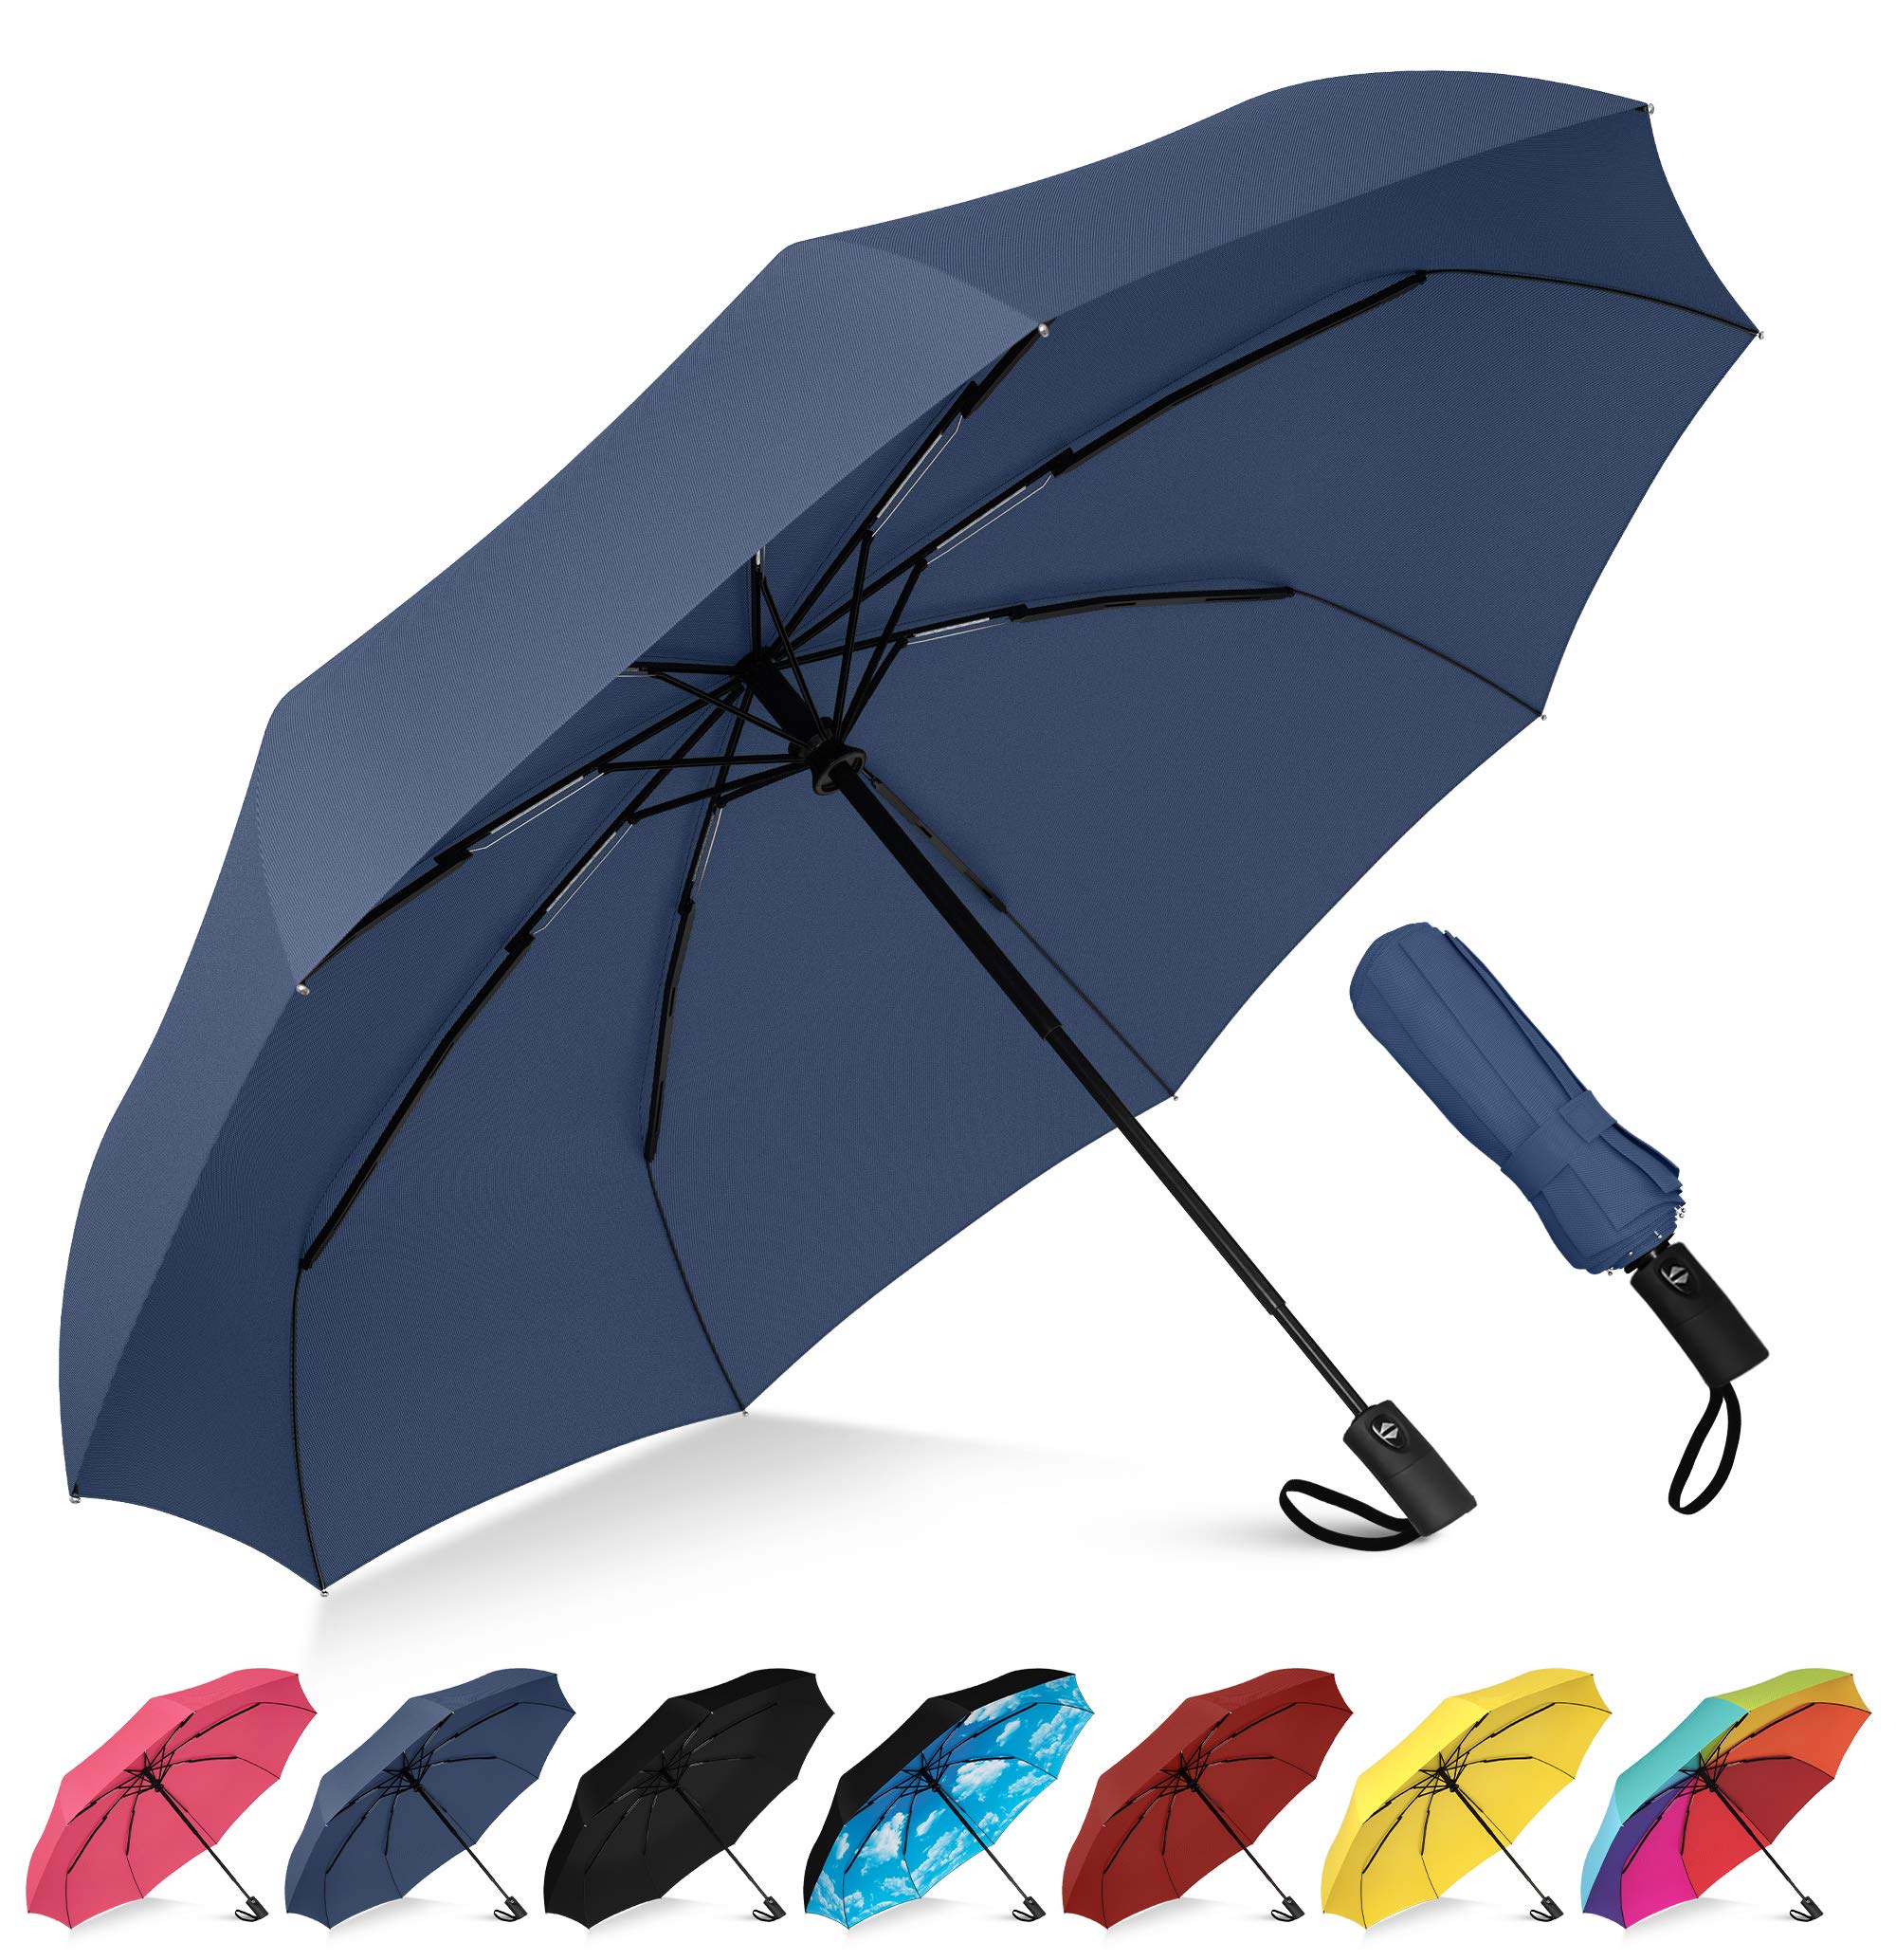 RainMate Compact Travel Umbrella Windproof Review